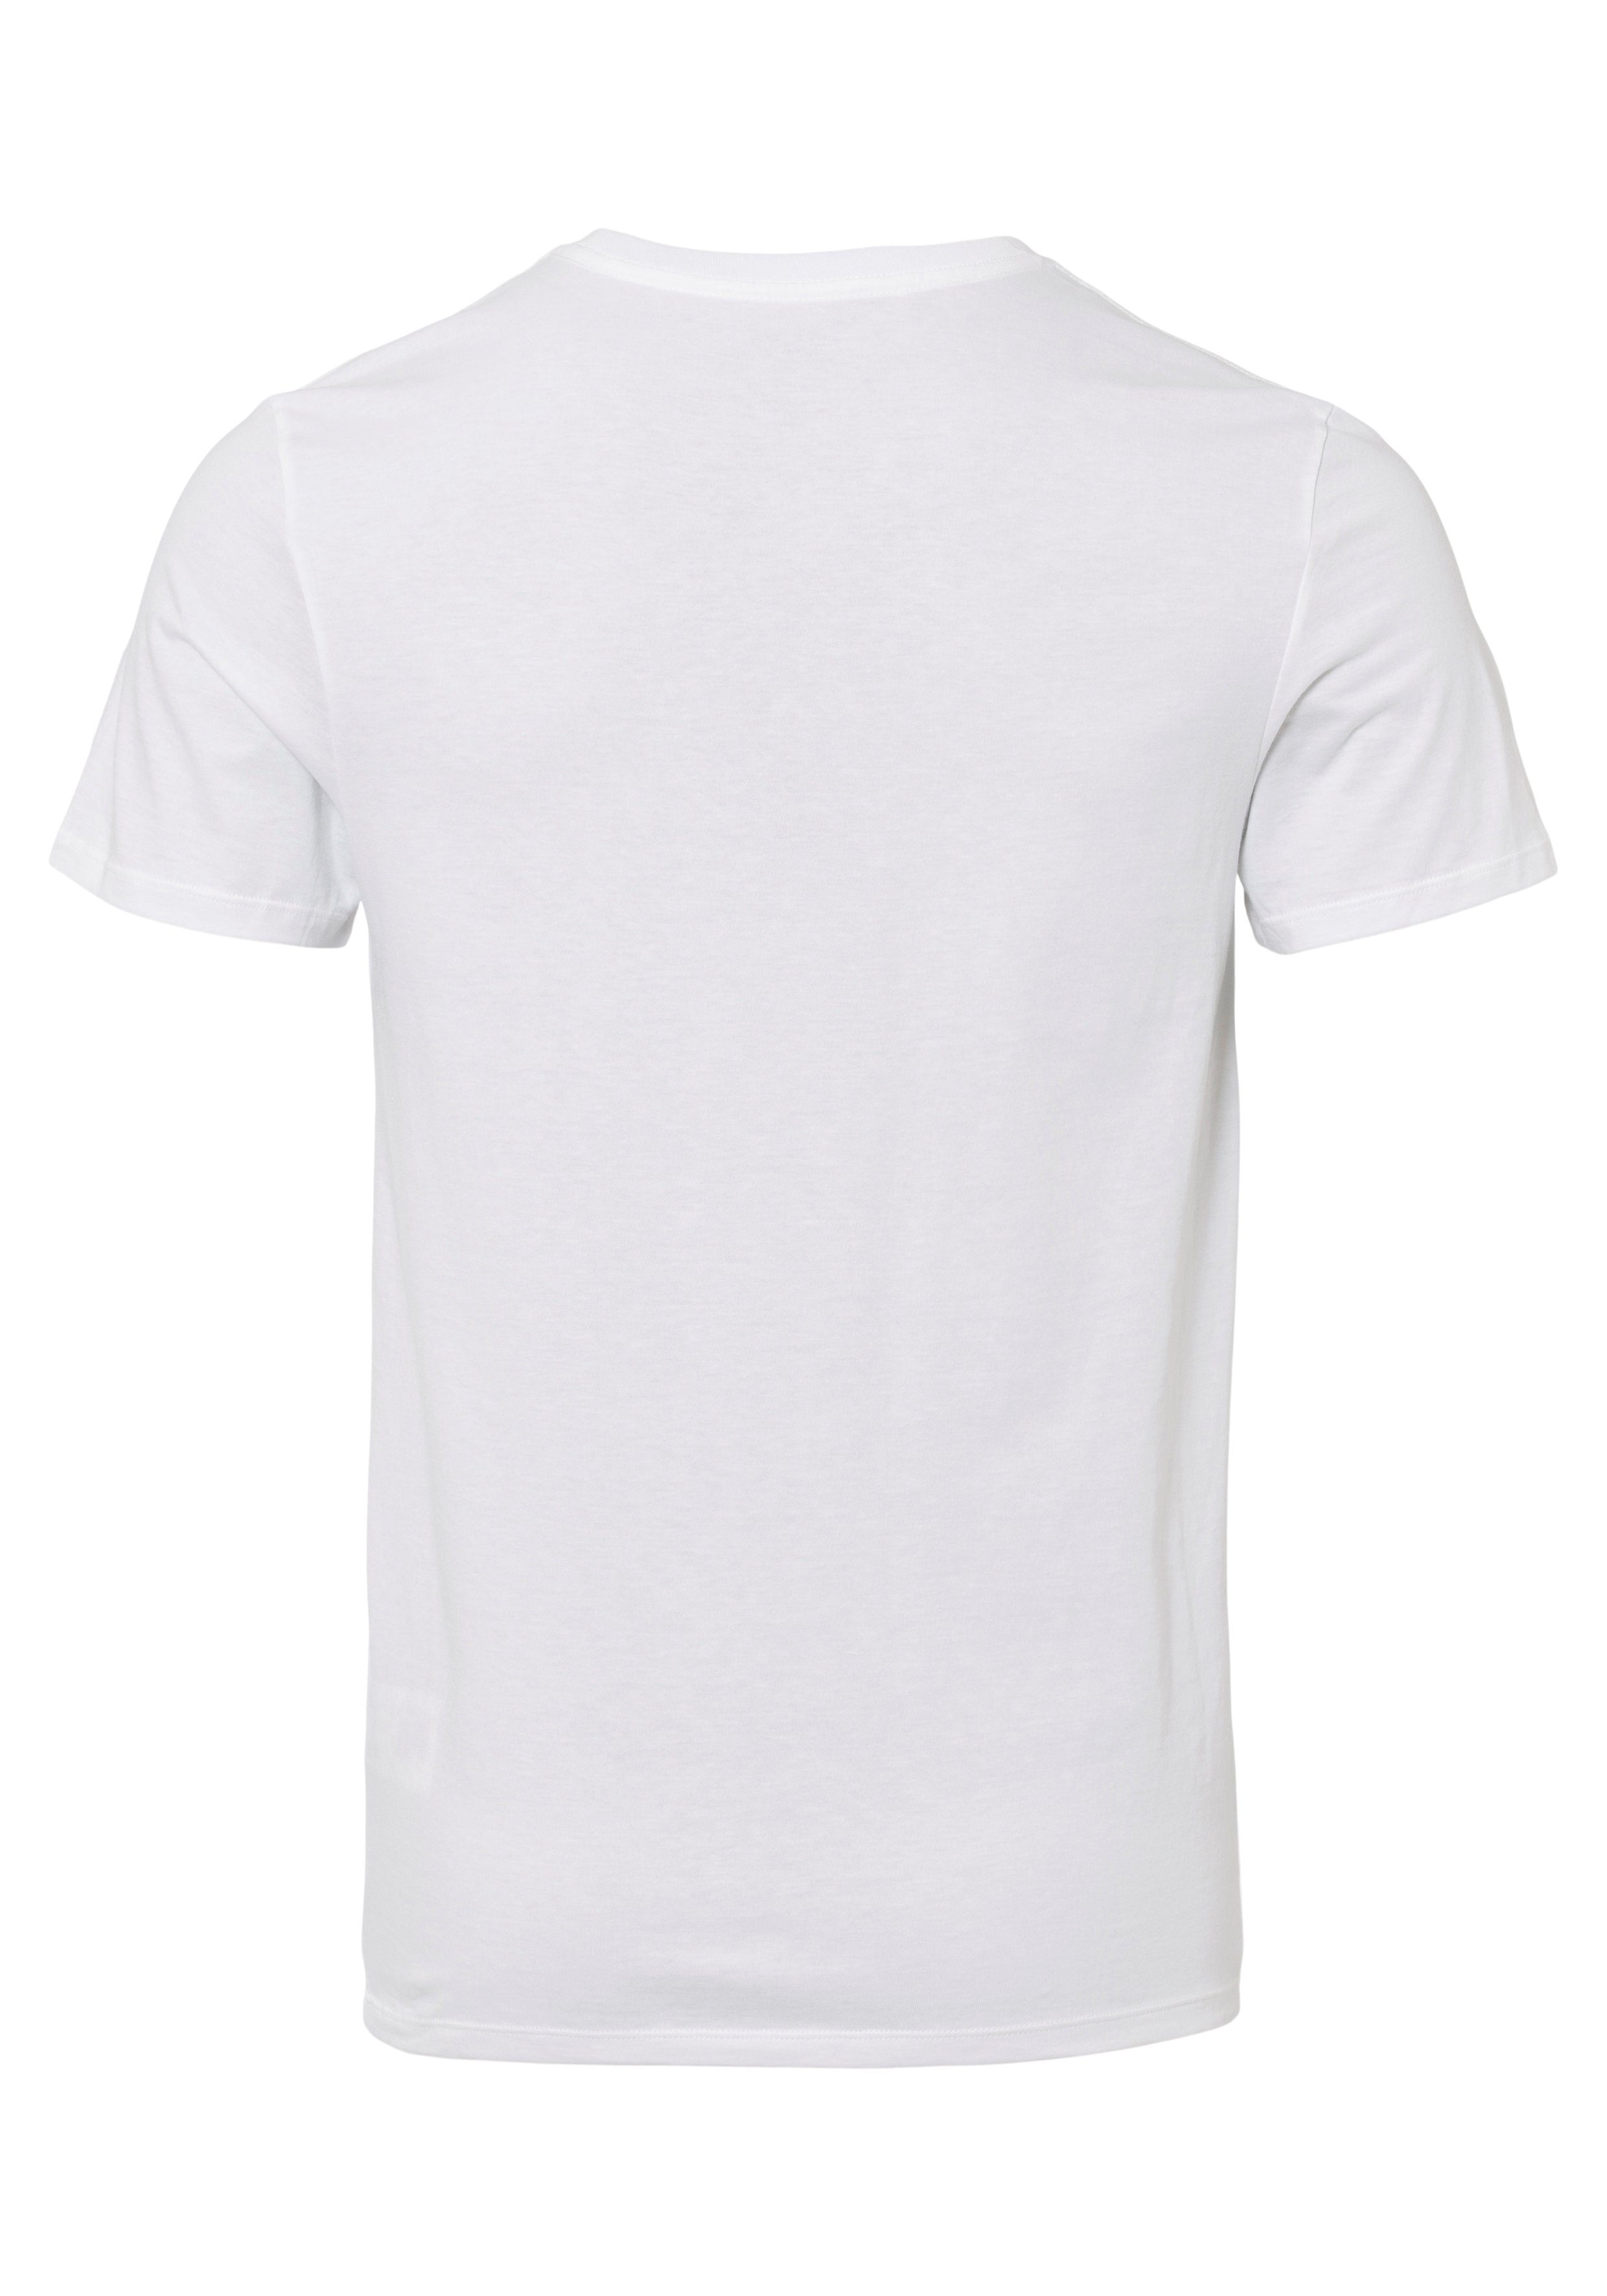 weiß T-Shirt (3er-Pack) angenehmes Atmungsaktives Baumwollmaterial Hautgefühl Lacoste für